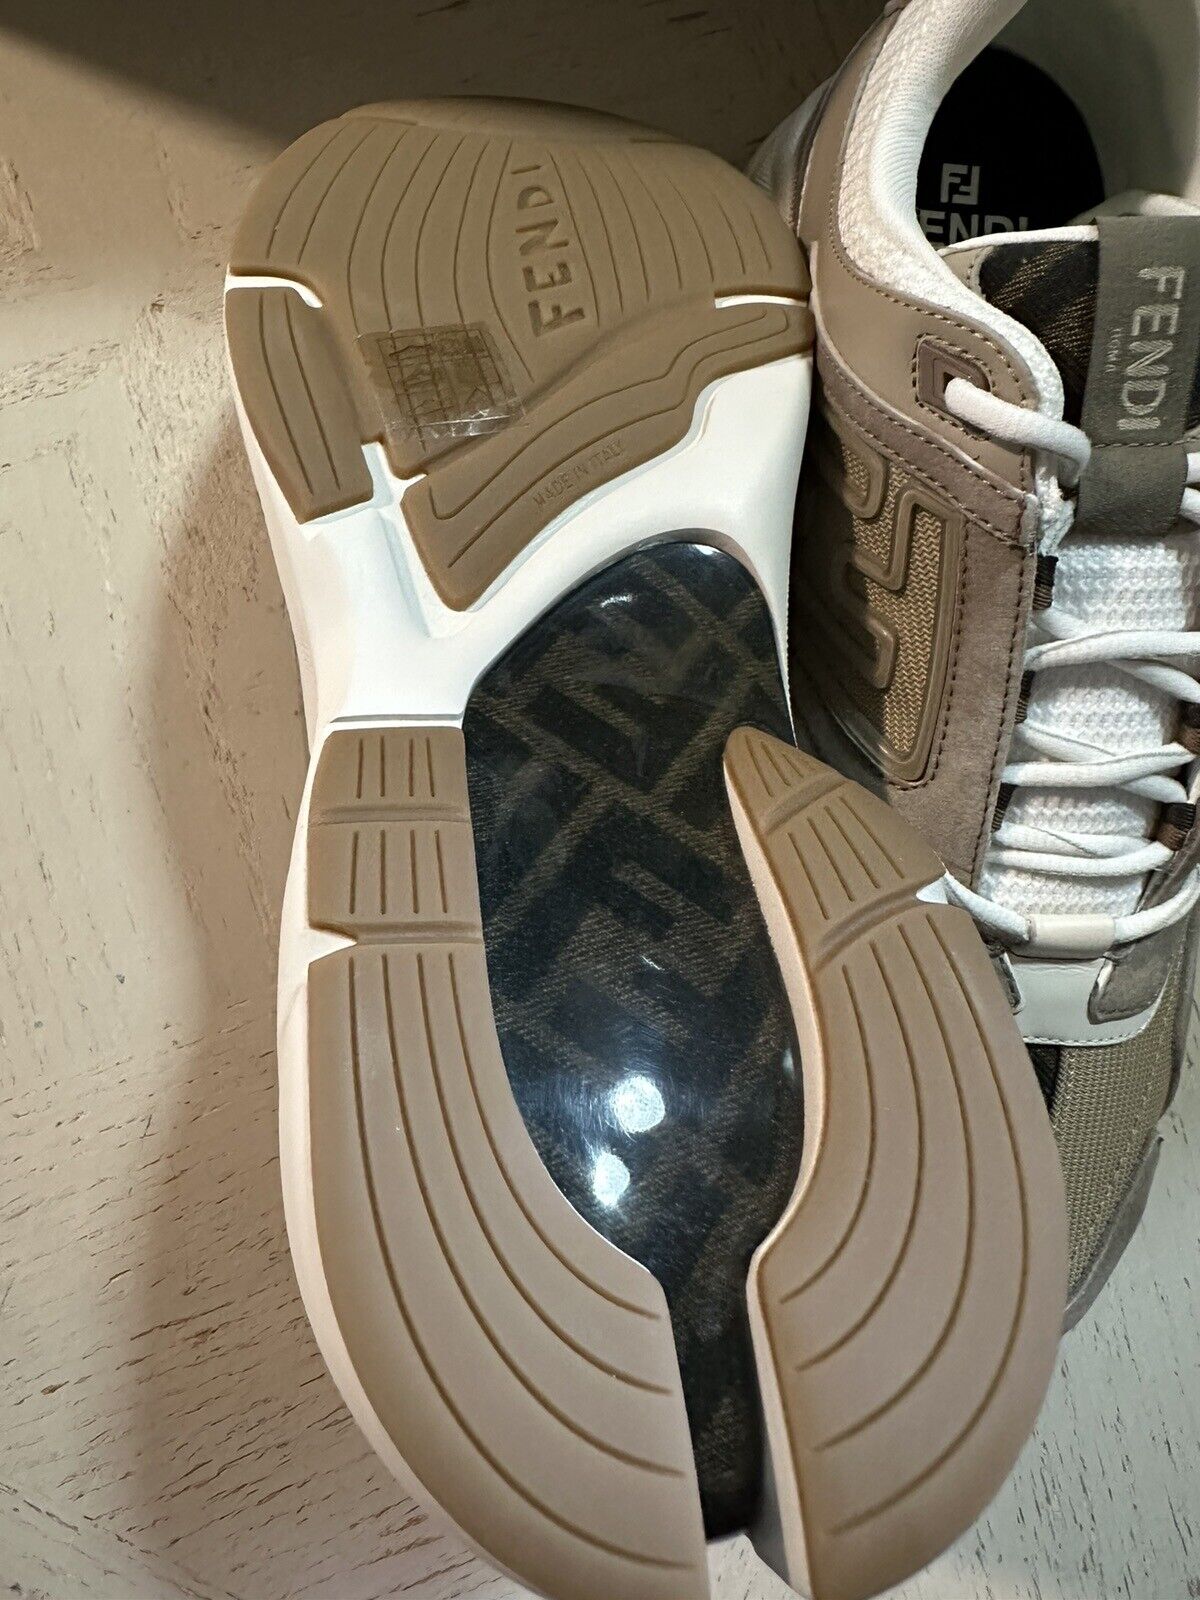 NIB $ 1100 Fendi Herren FF Logo Athletic Sneakers Grau 12 US/11 UK